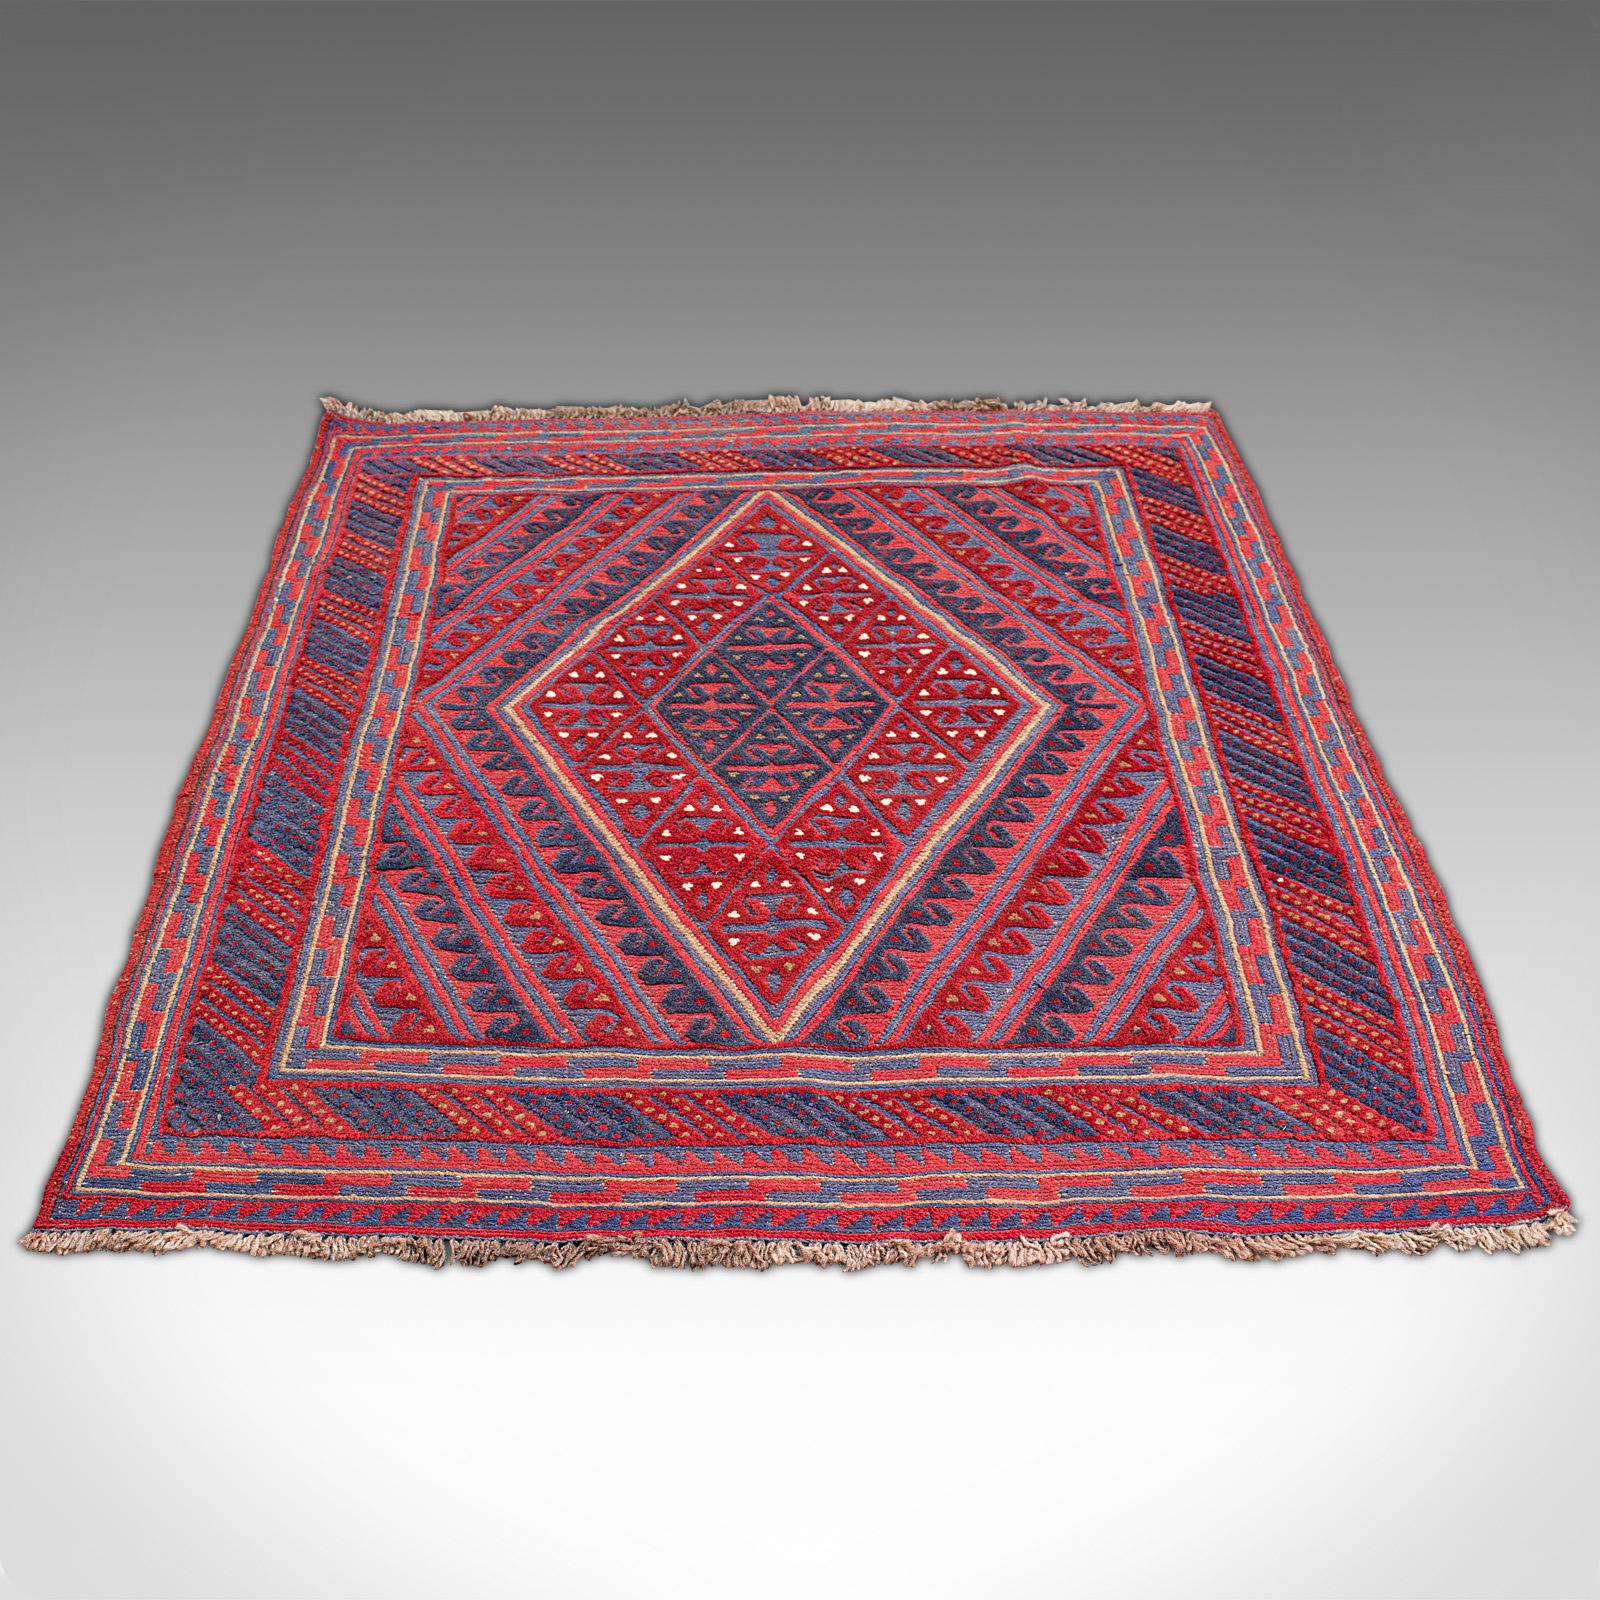 Textile Meshwani Gazek tapis caucasien vintage tissé caucasien, hall, salon, tapis, fin du XXe siècle en vente